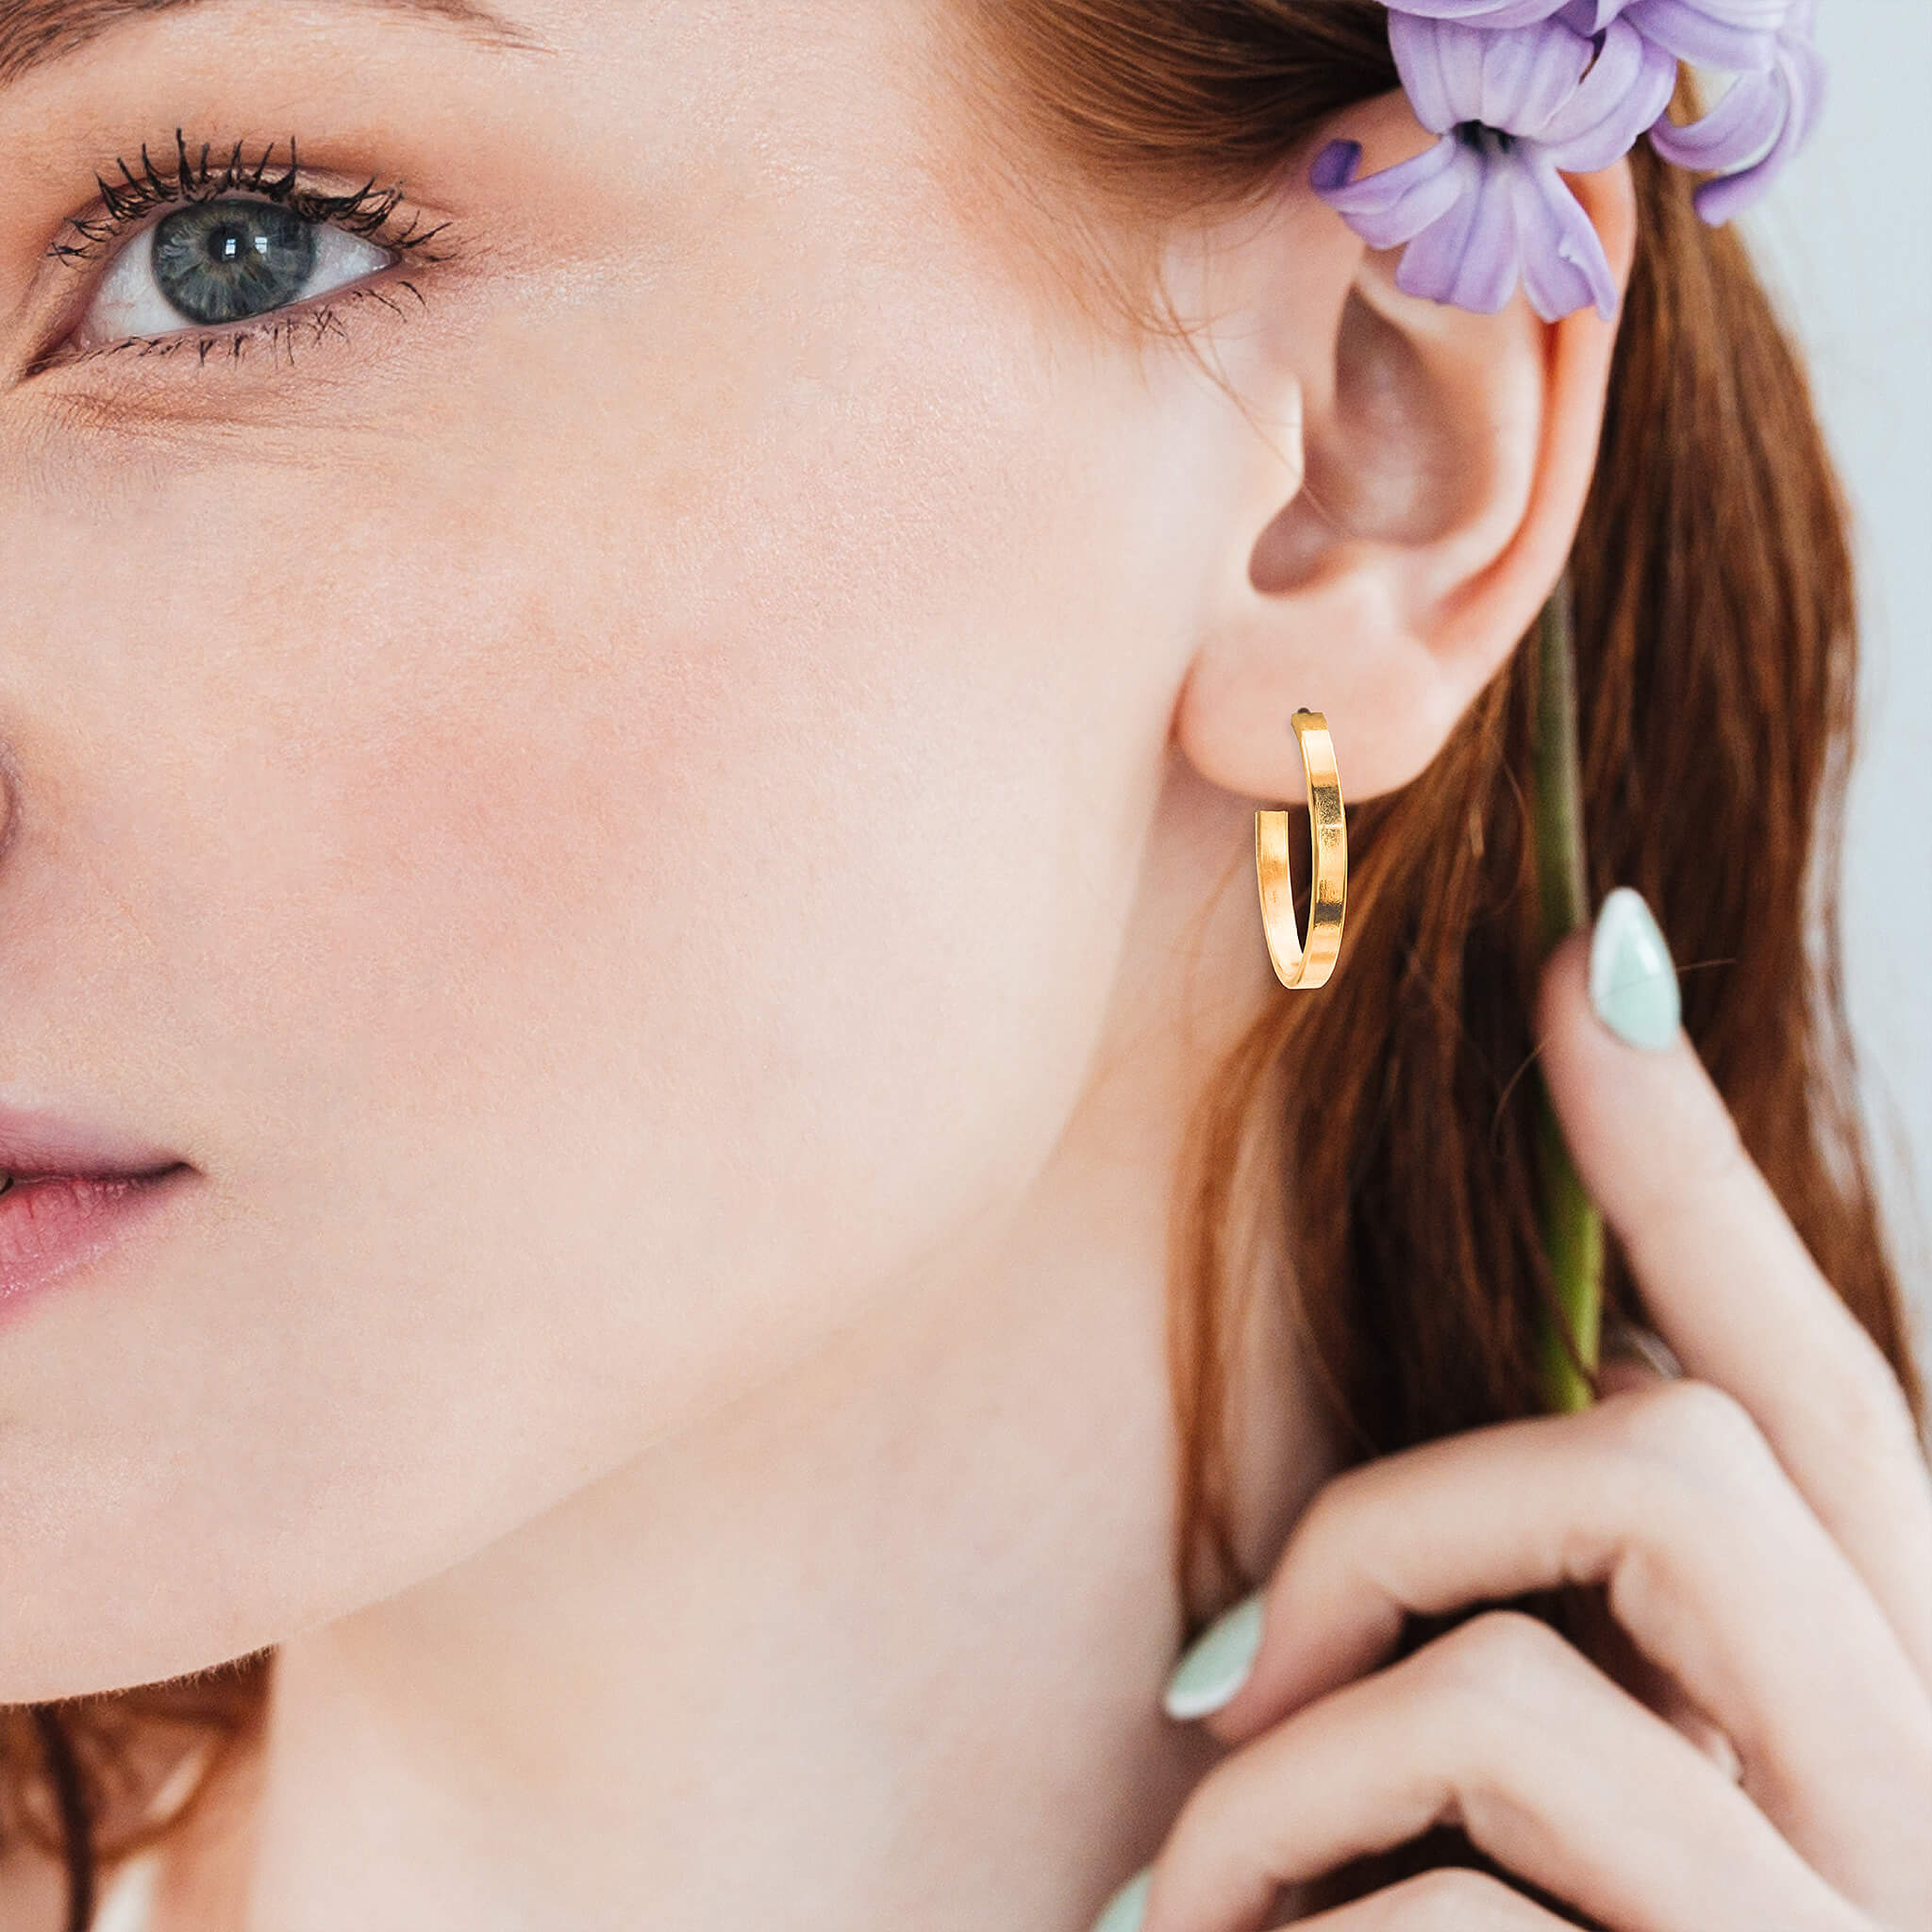 Gold Hoop Post Earring - Earrings